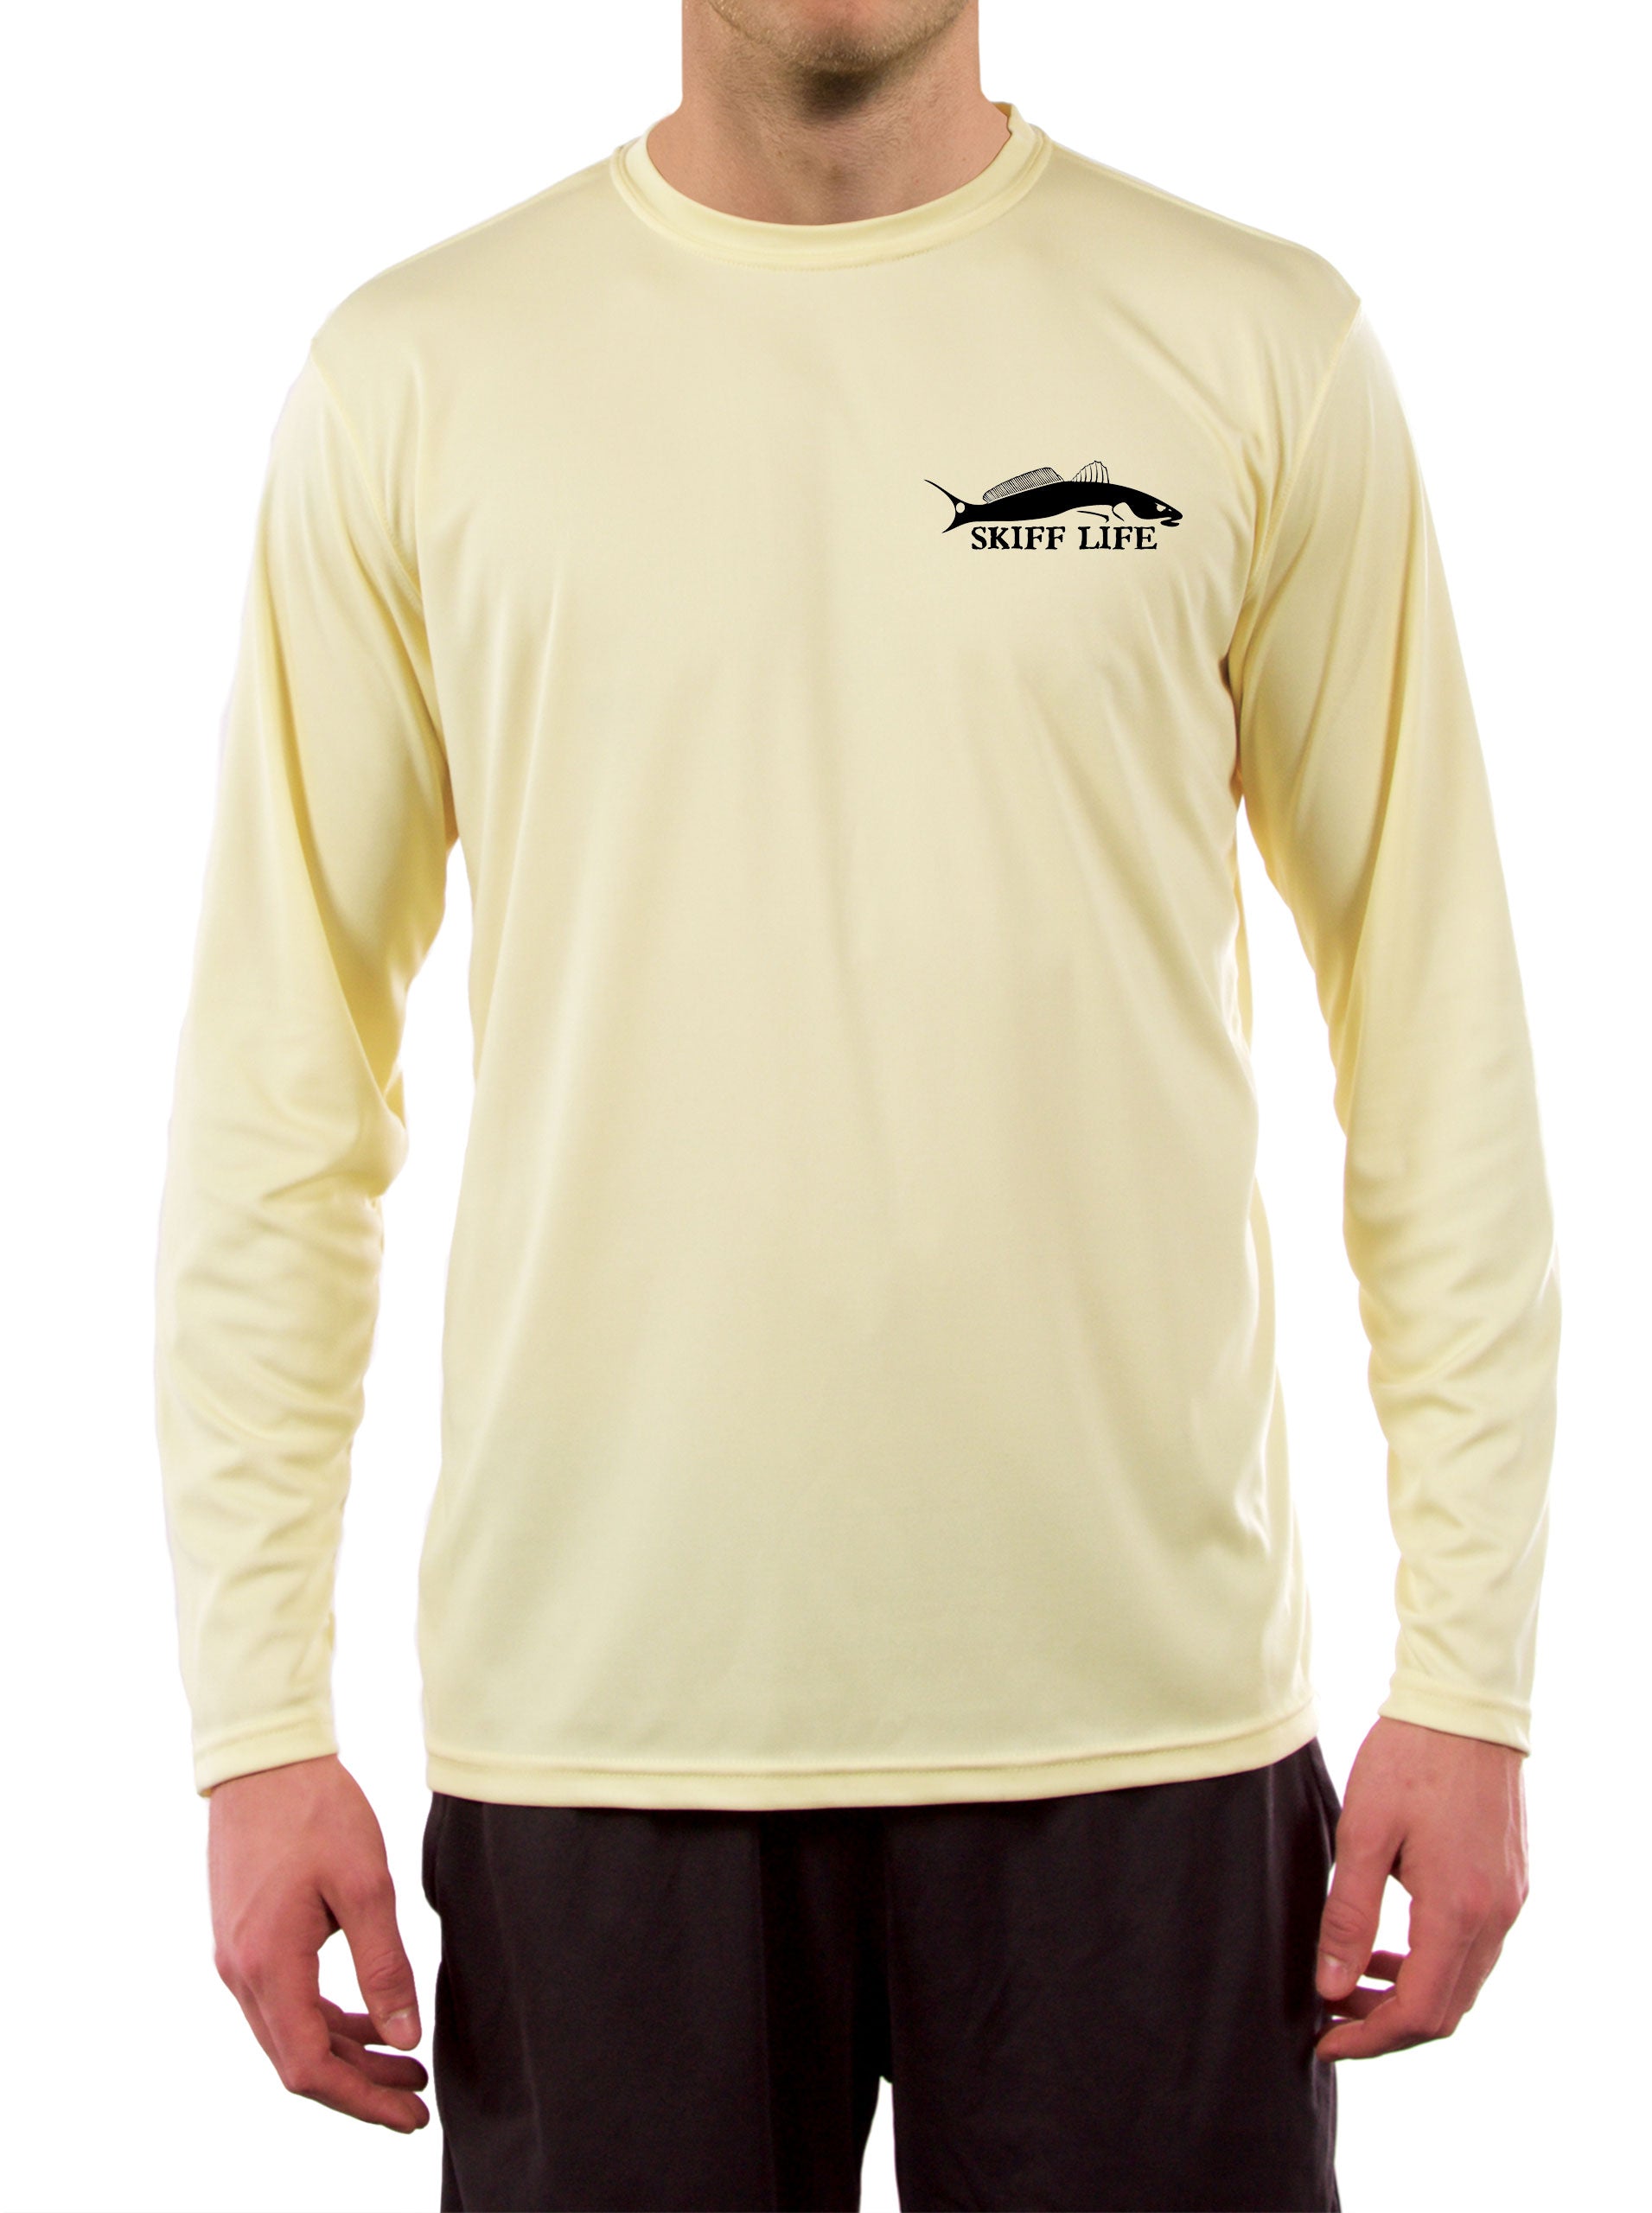 ZENGVEE 3 Pack Men's Sun Protection Long Sleeve Fishing Shirts UPF 50+  Quick Dry Swim Shirts for Hiking,Athletic,Running,Workout,Outdoor(Gray Blue  Darkgray,M) - Kayaking and Kayak Fishing Store